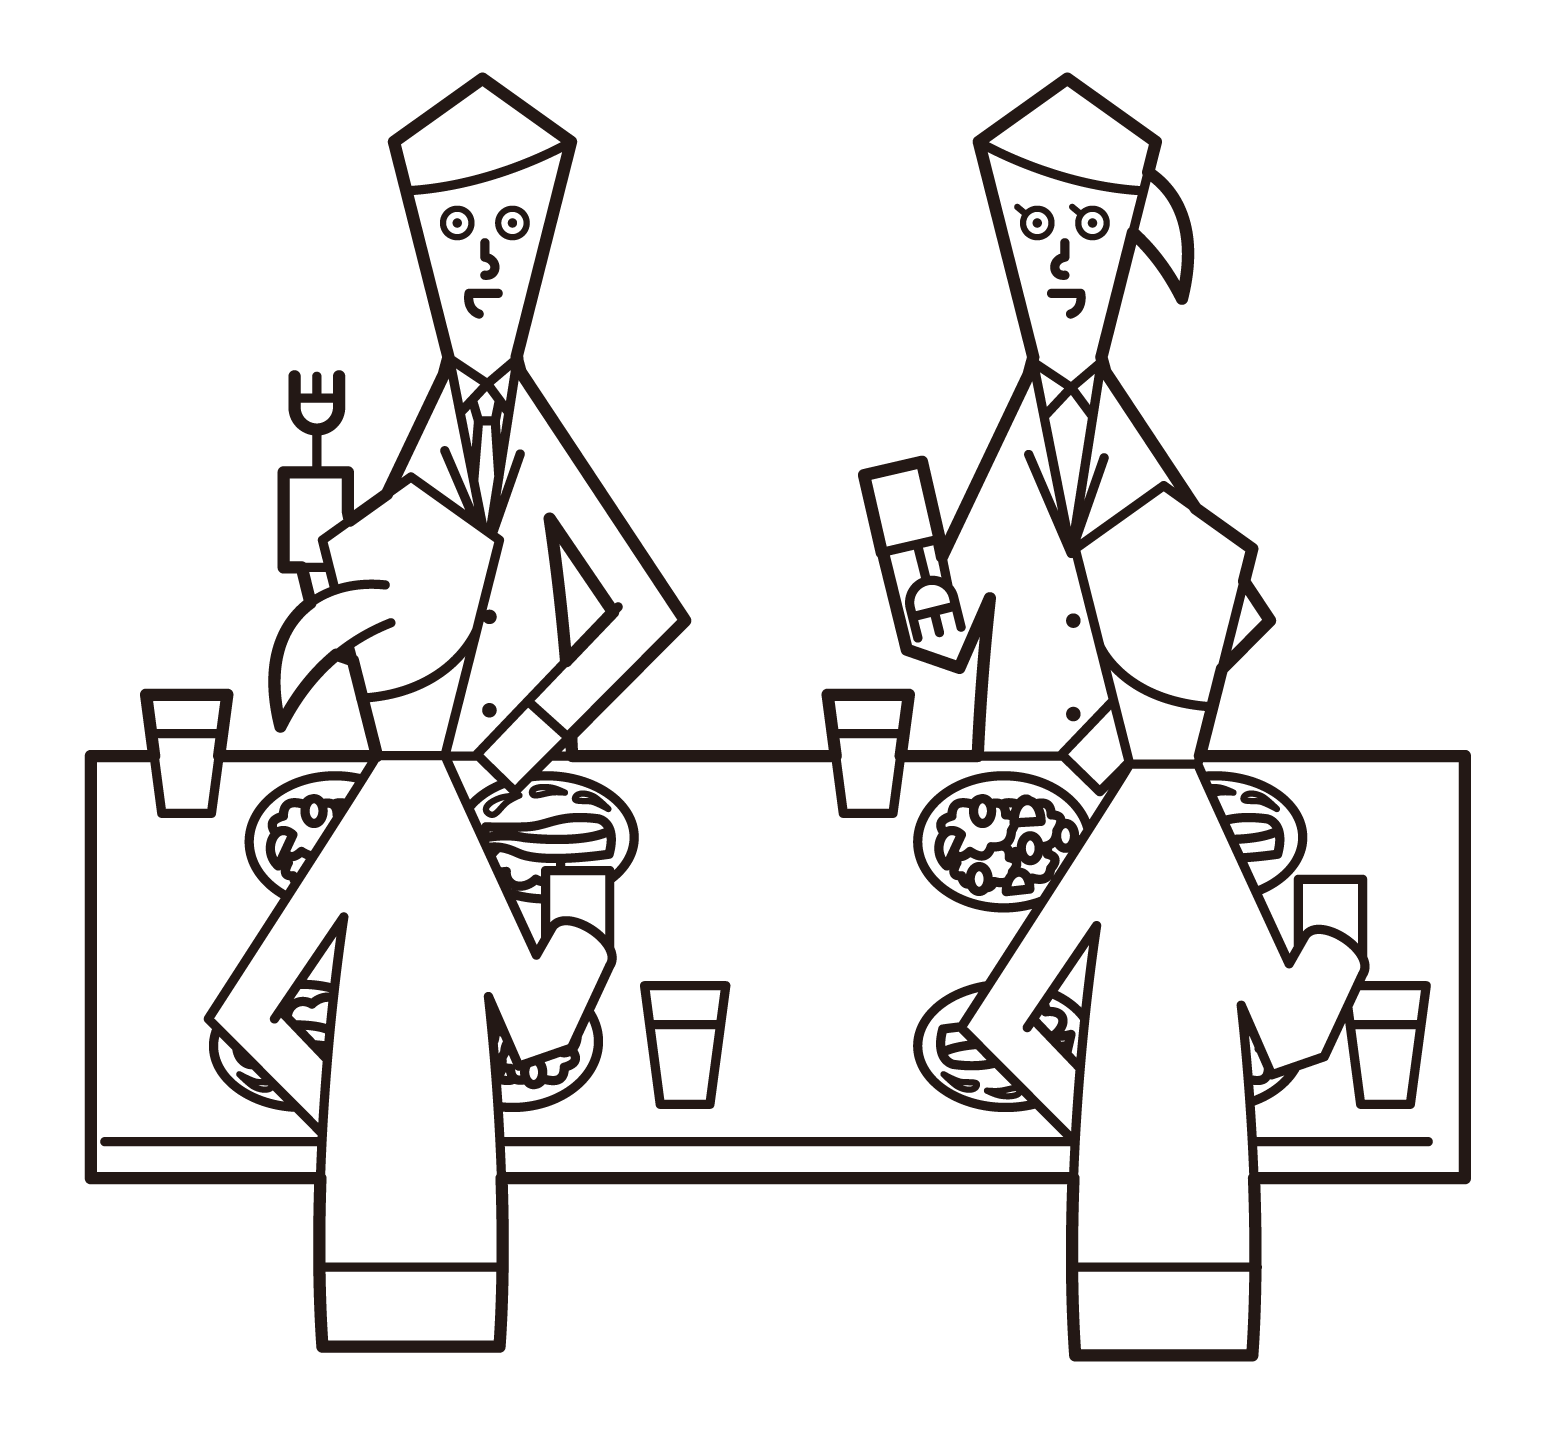 Illustrations of people (men) enjoying lunch